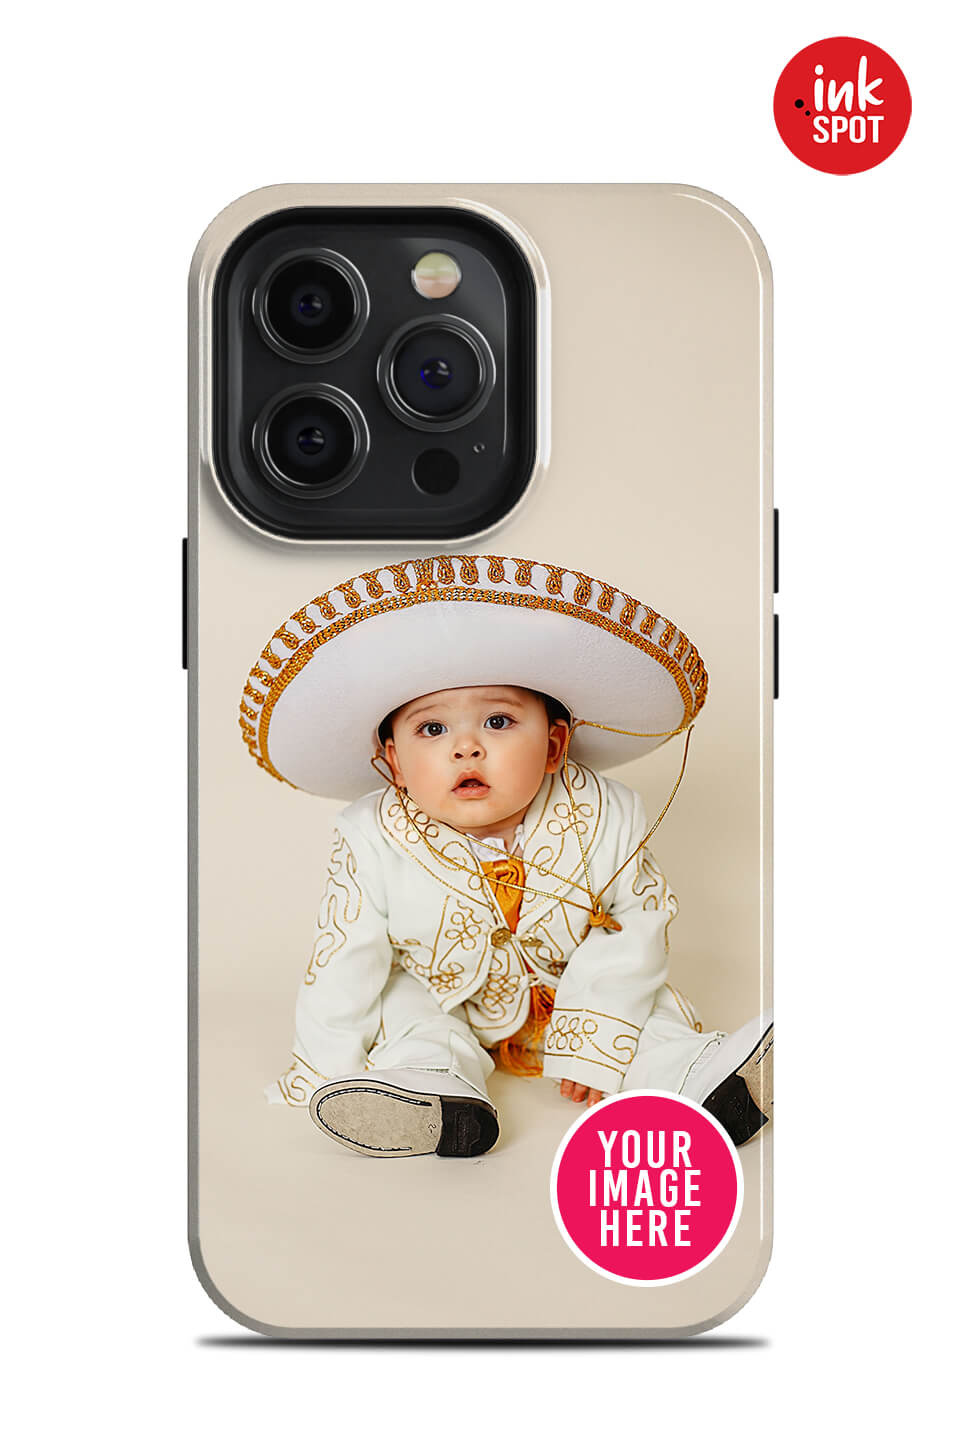 Baby Custom Photo iPhone Case - all iPhone models - Shopinkspot.com